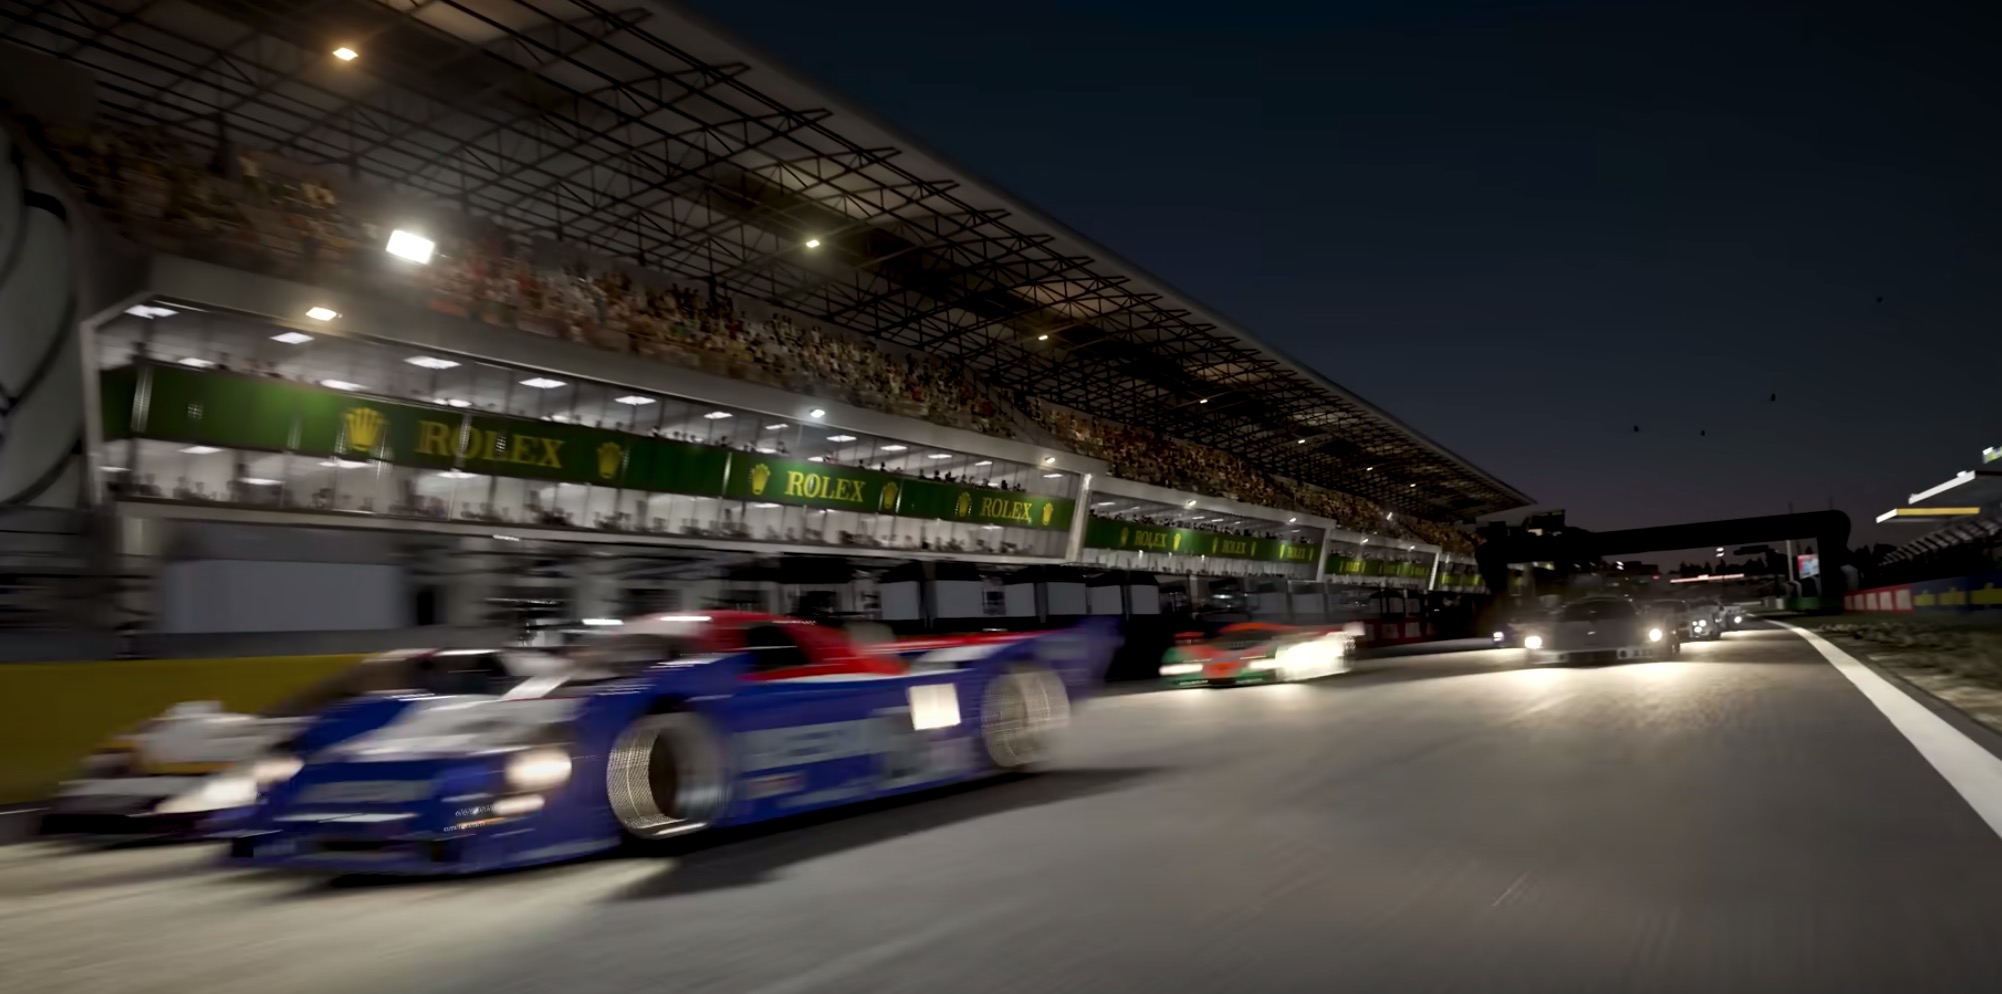 Forza Motorsport (2023 video game) - Wikipedia